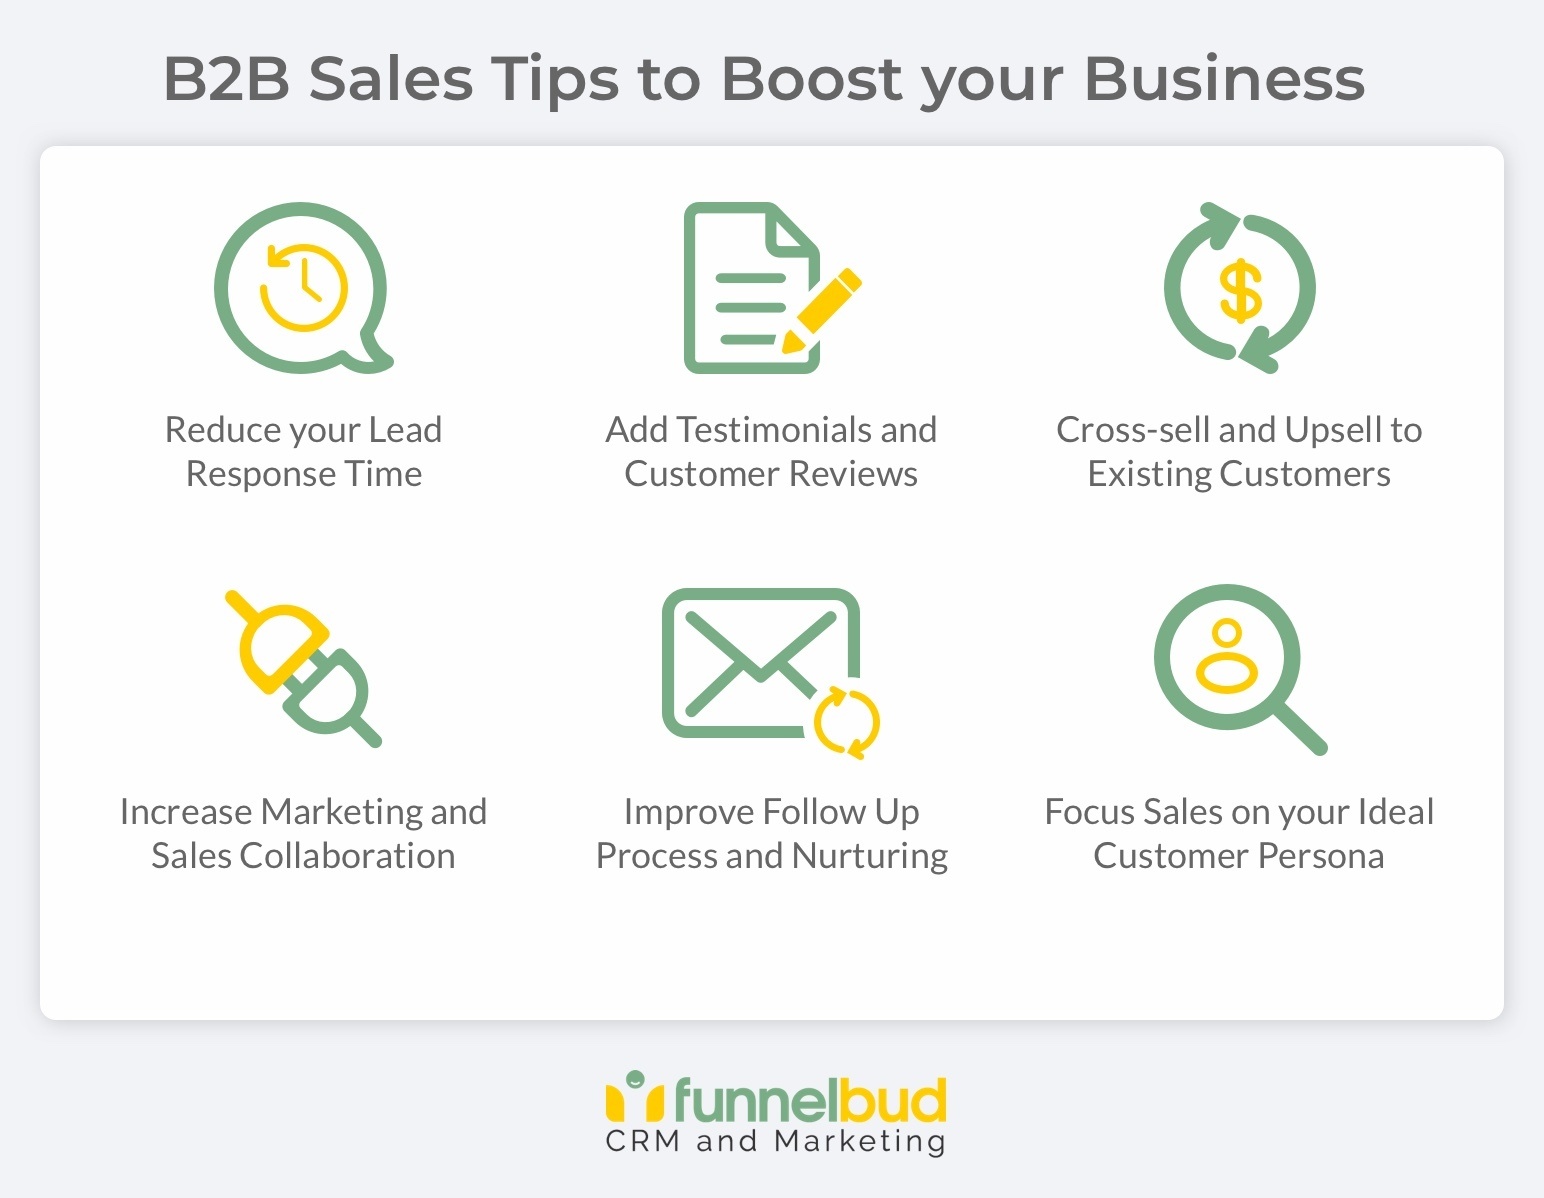 B2B Sales Tips image